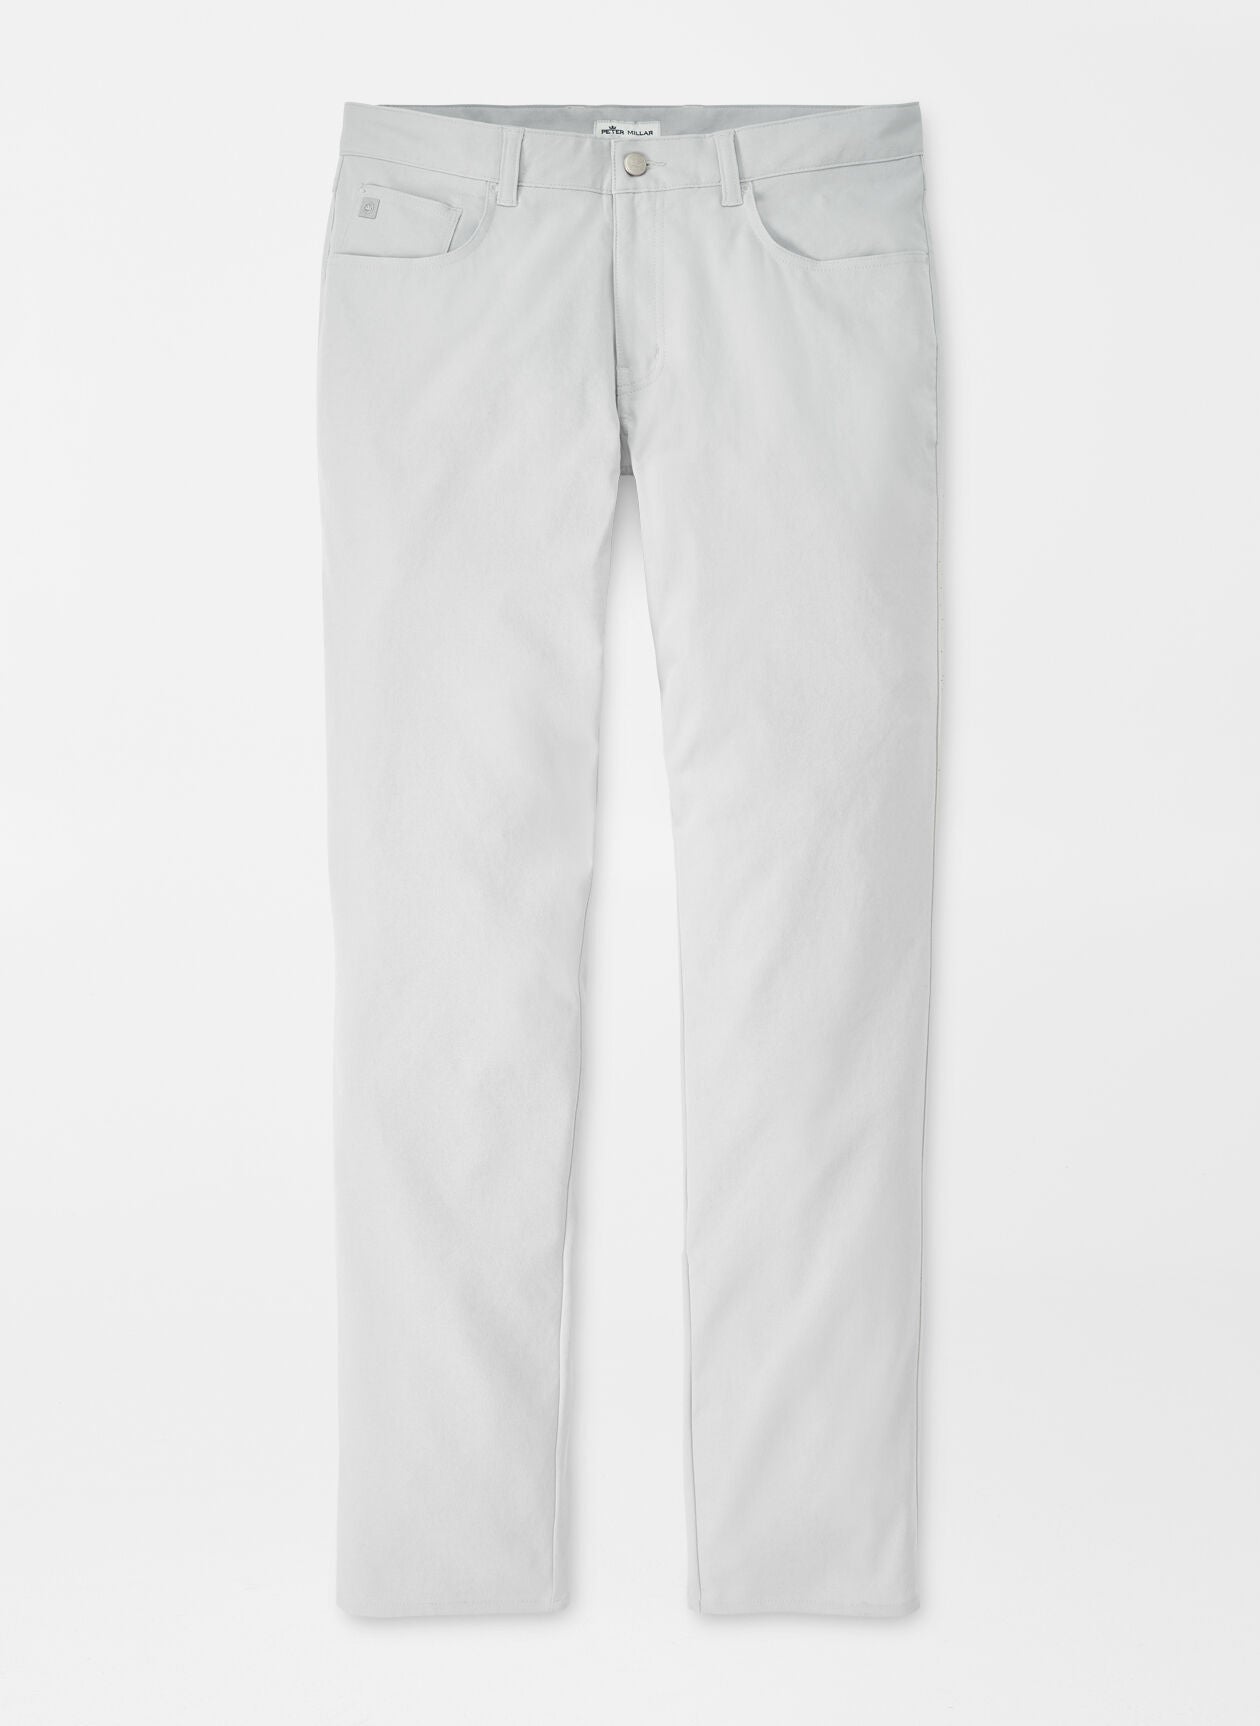 Peter Millar Performance Fabric EB66 5 Pocket Pant NWT $158 38 x